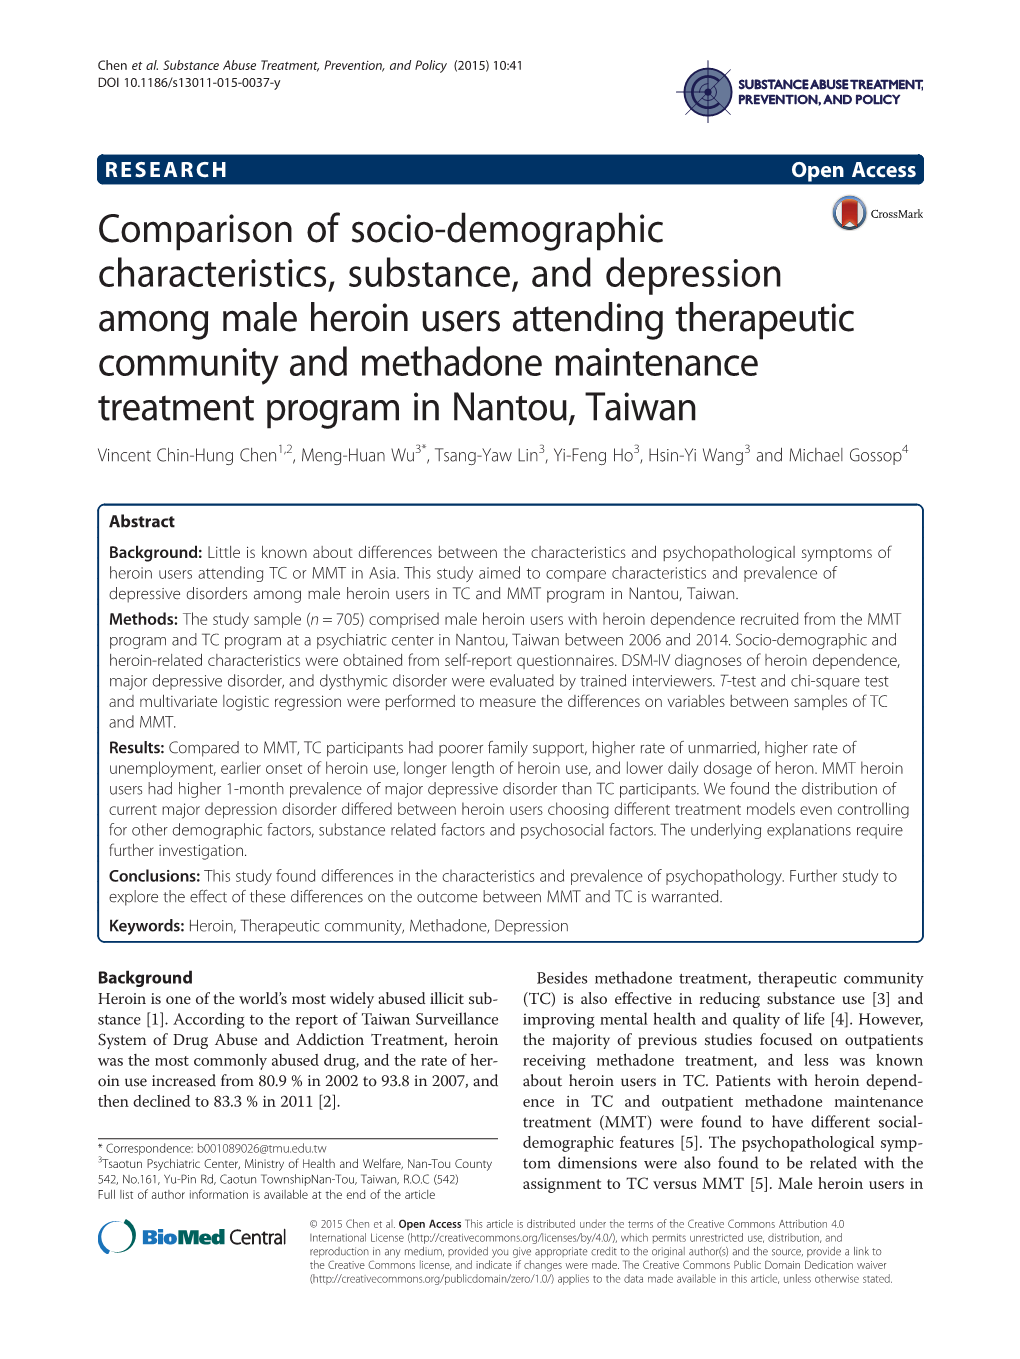 Comparison of Socio-Demographic Characteristics, Substance, And